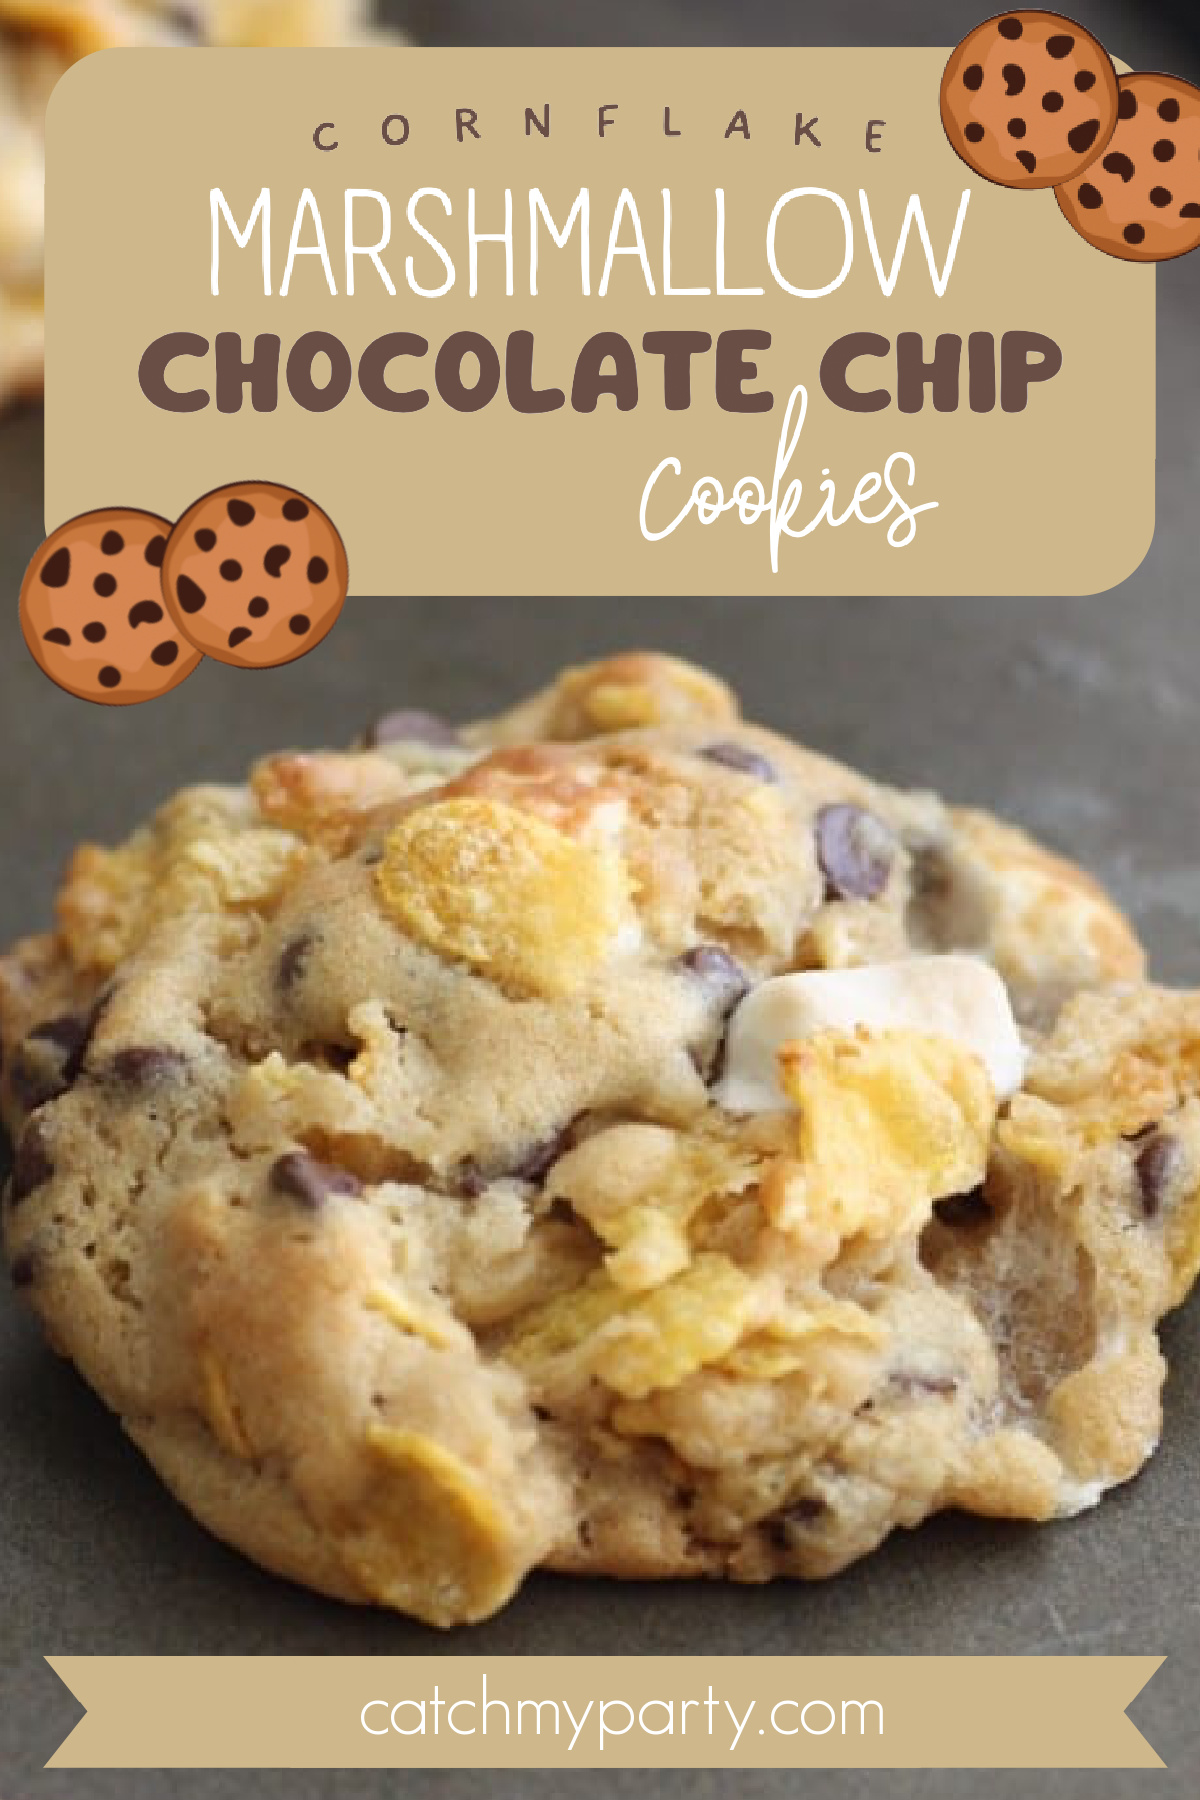 Cornflake Marshmallow Chocolate Chip Cookie Recipe